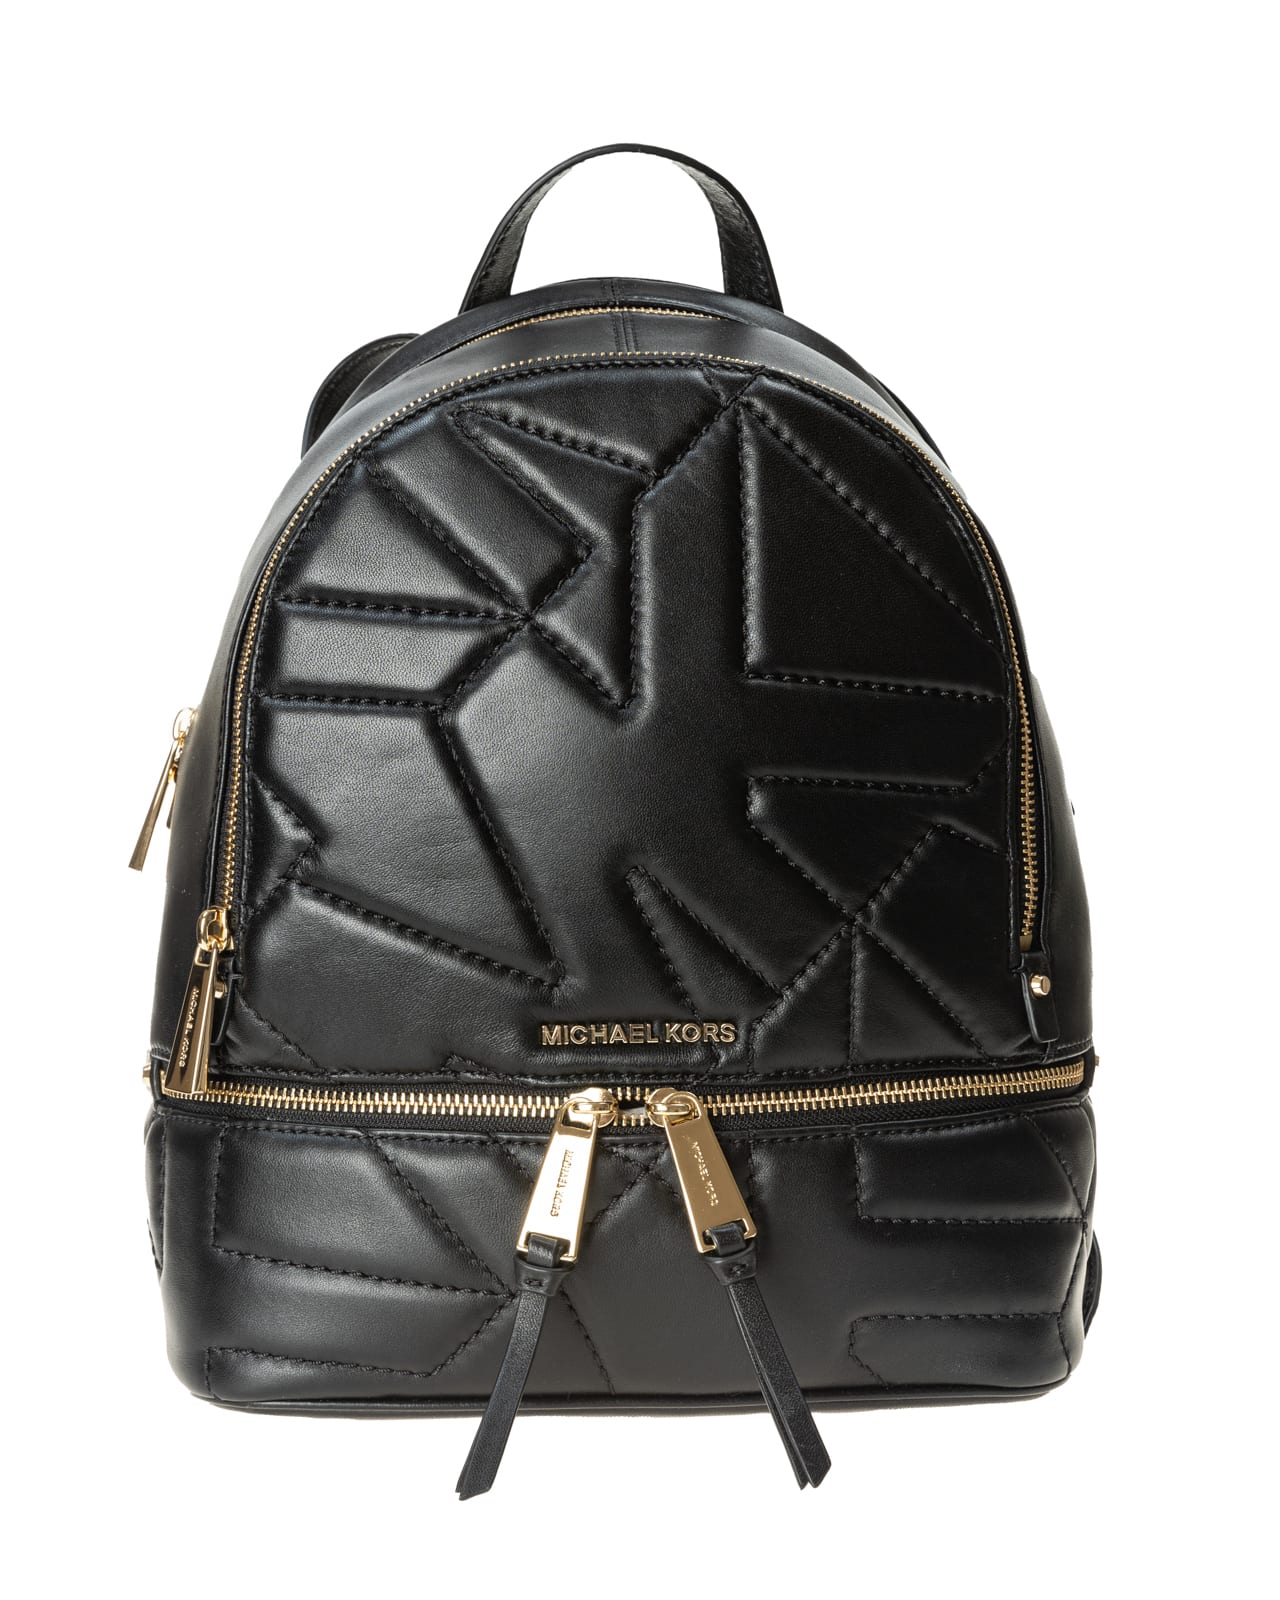 Michael Kors Rhea medium backpack